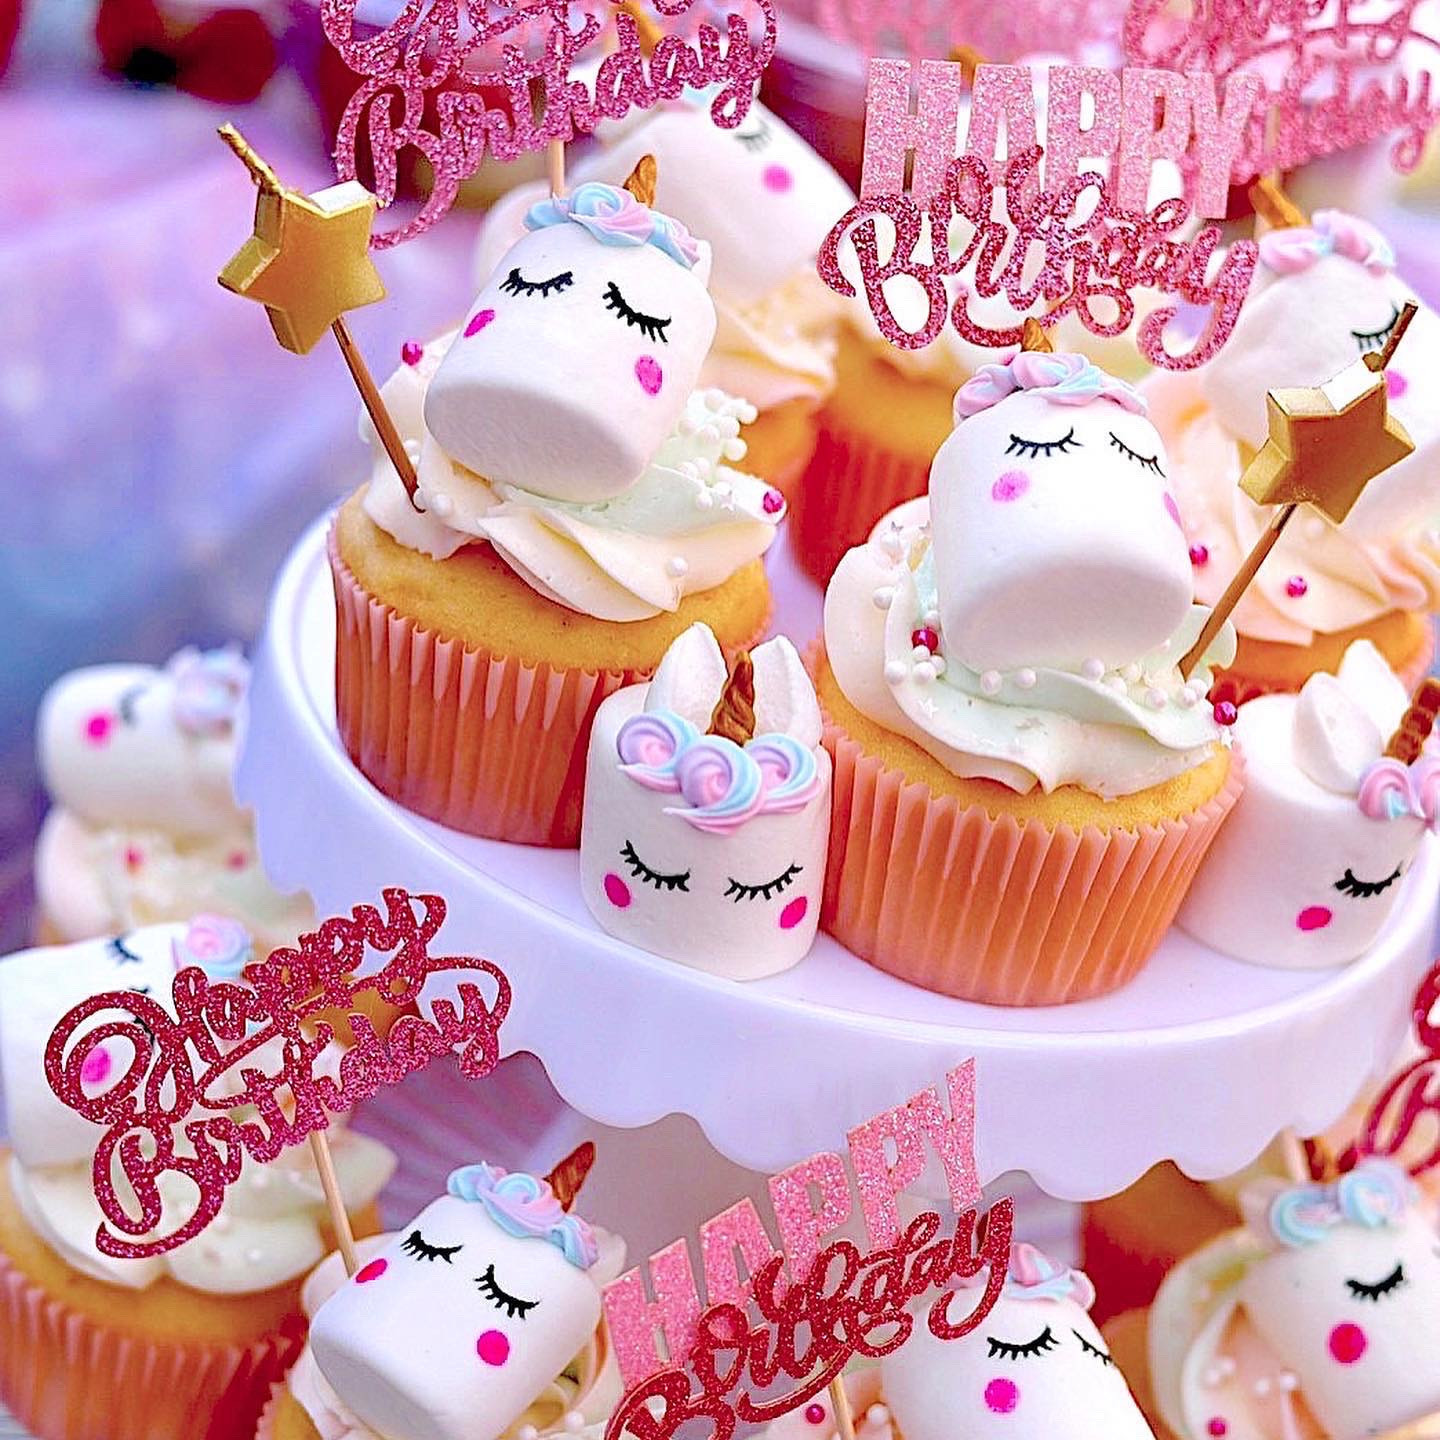 Unicorn cupcakes for the birthday girl